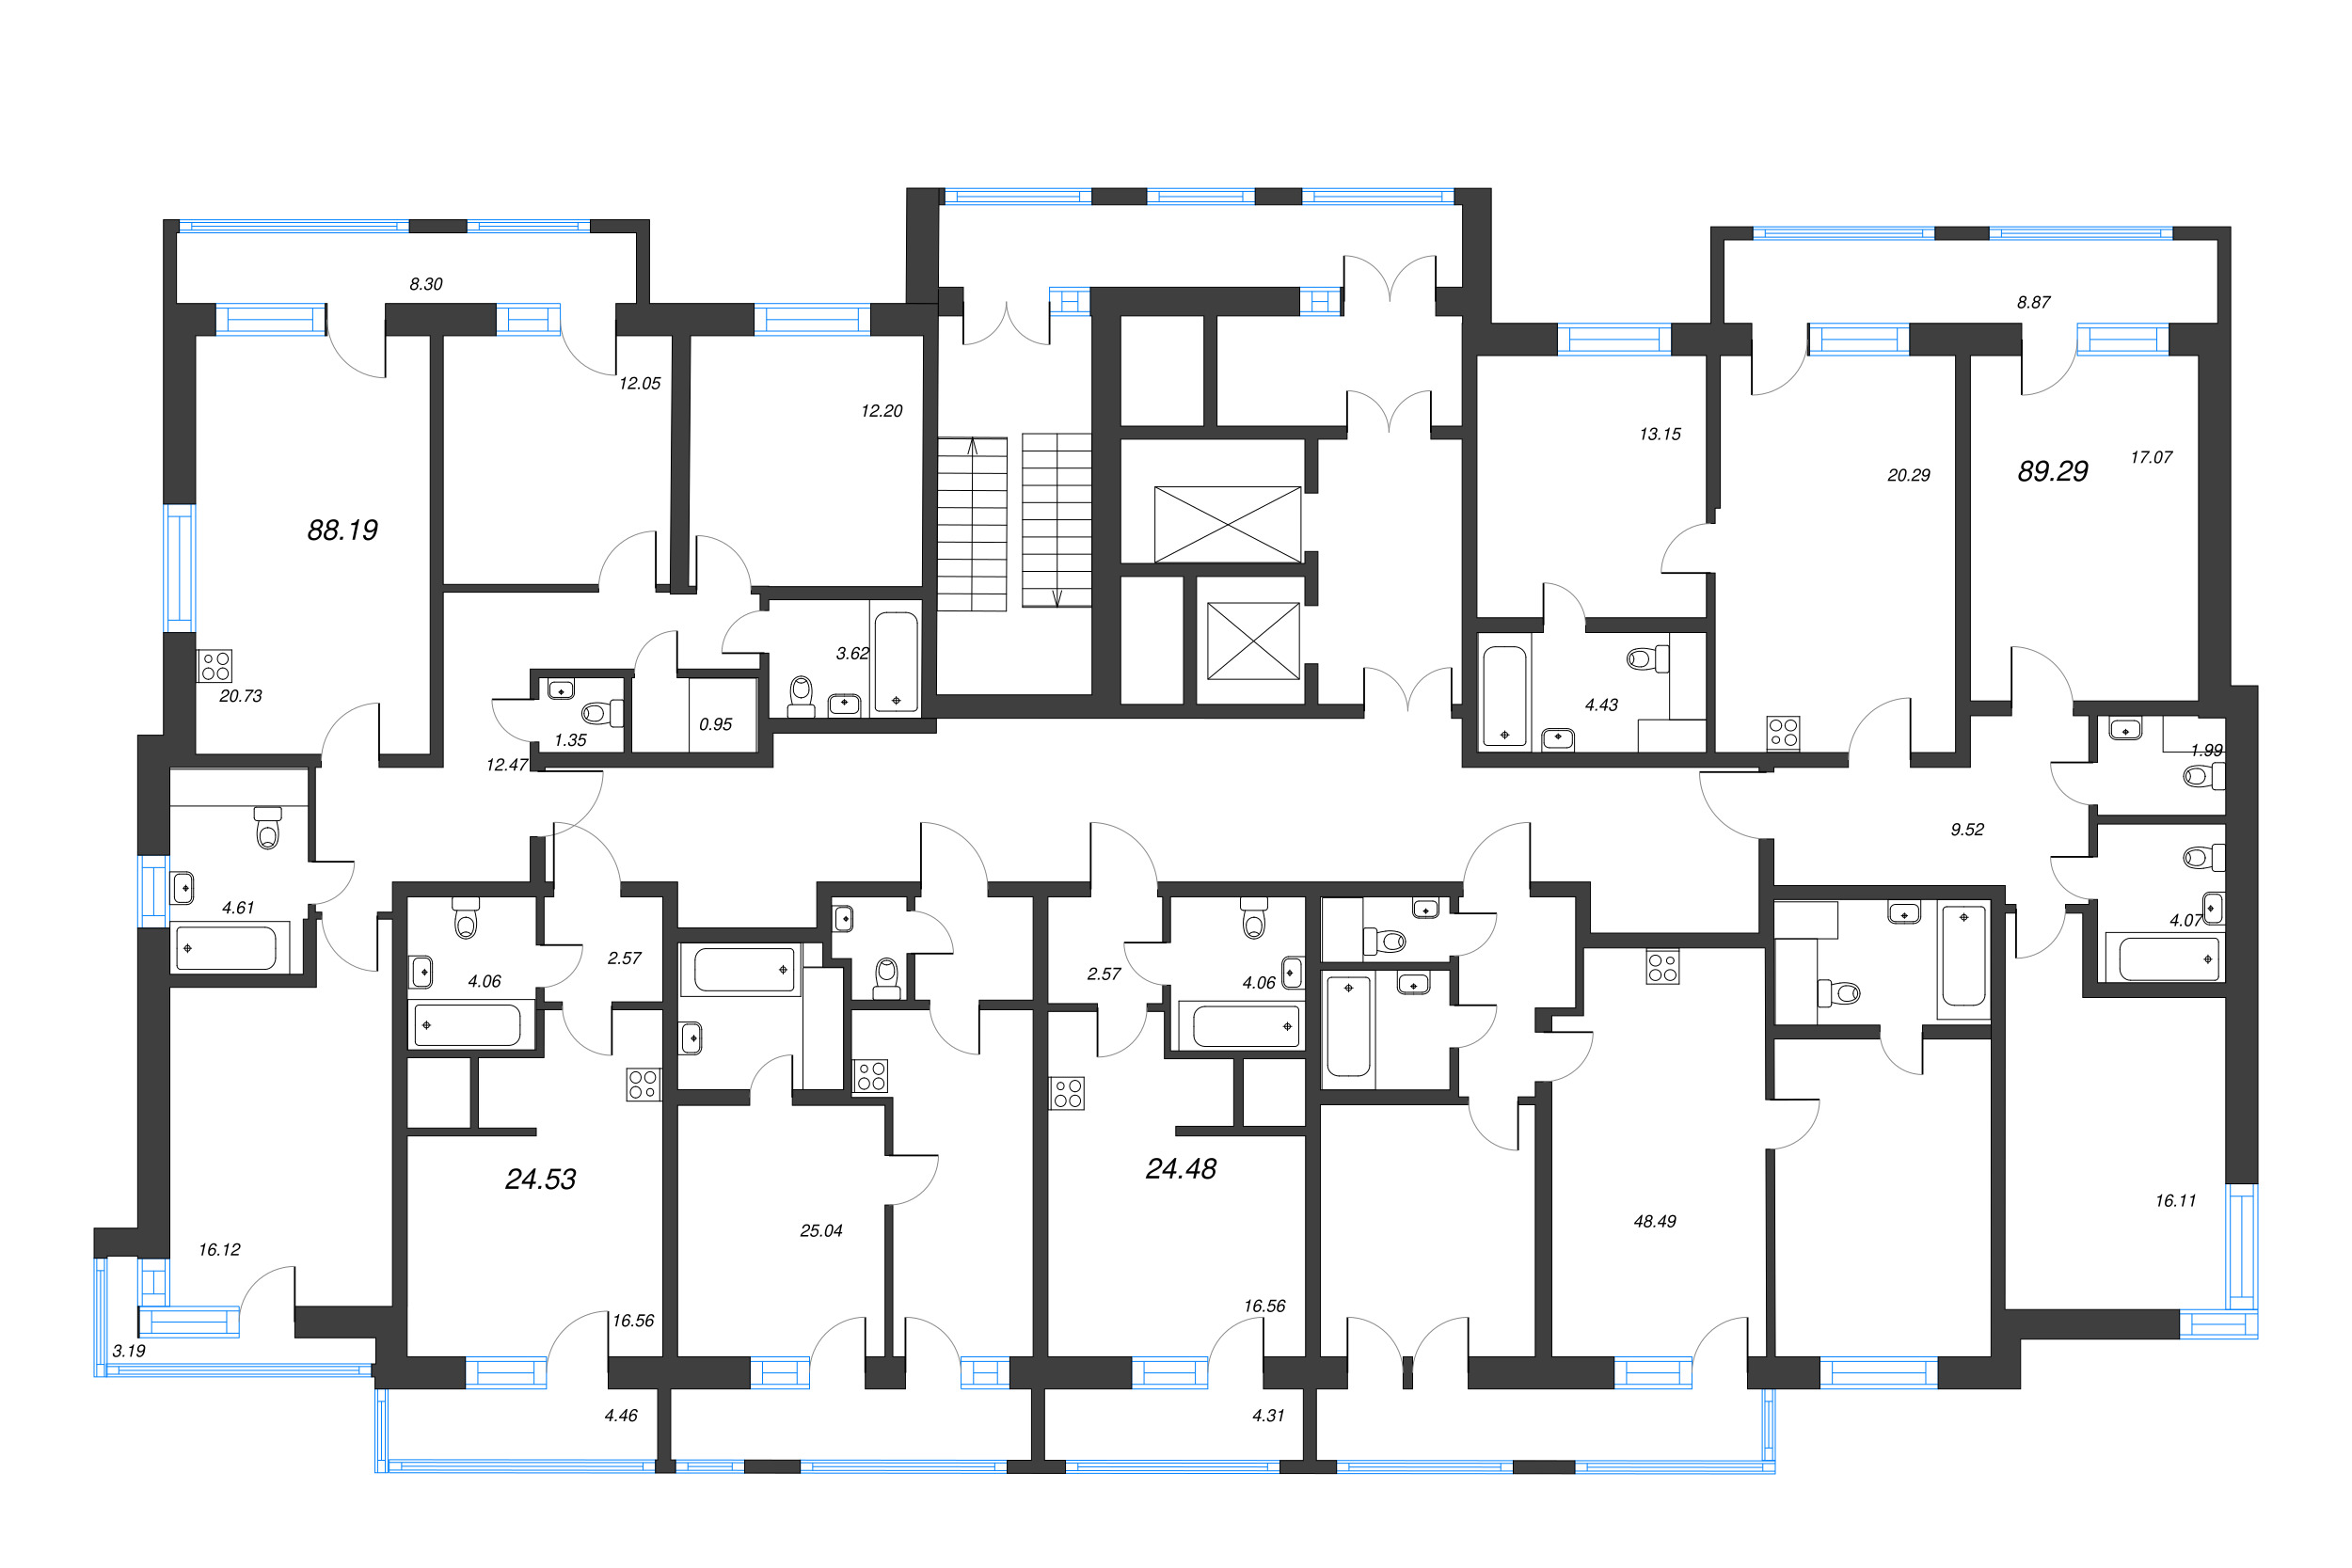 4-комнатная (Евро) квартира, 88.19 м² - планировка этажа